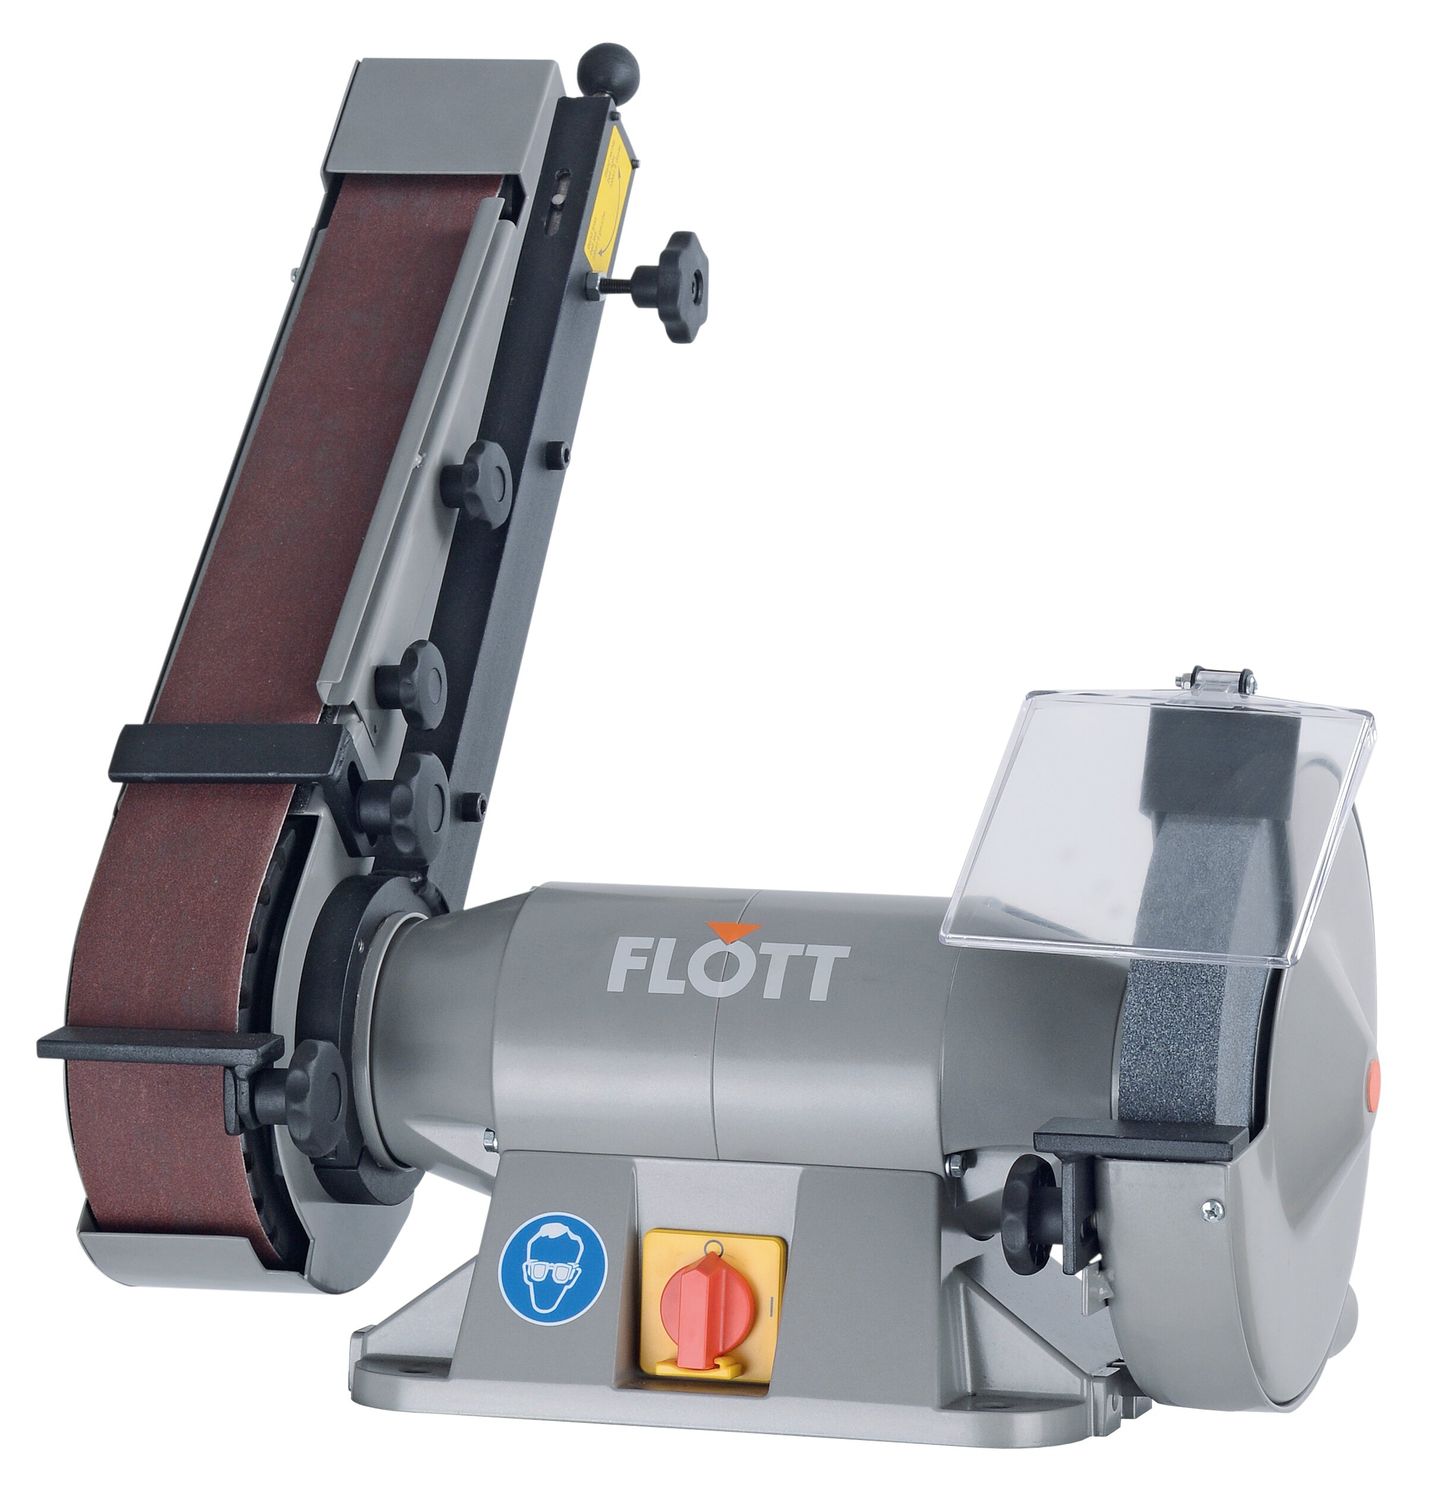 FLOTT Kombinierte Schleifmaschine TSB 250 P